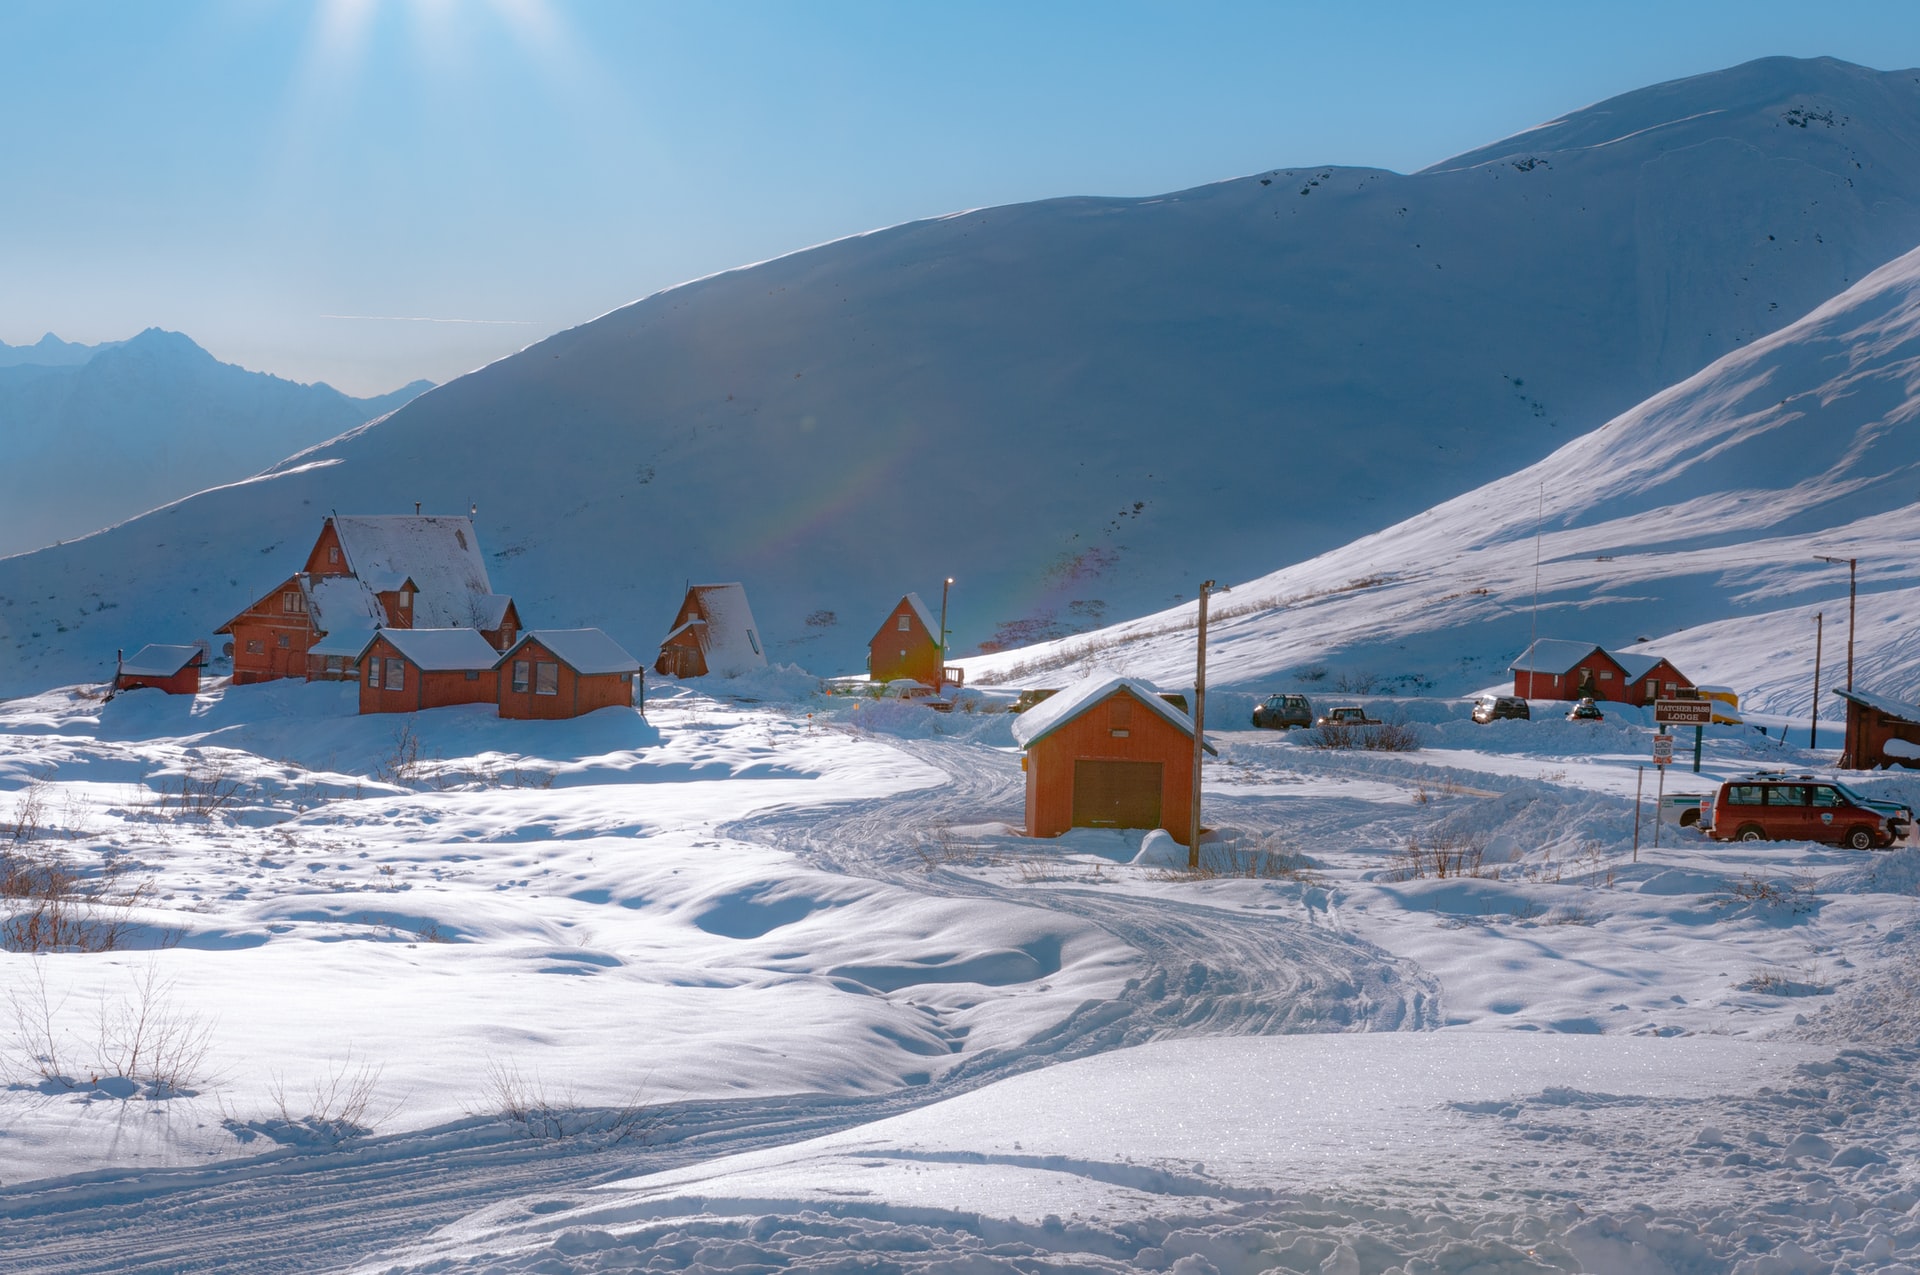 Snowy remote village in Alaska